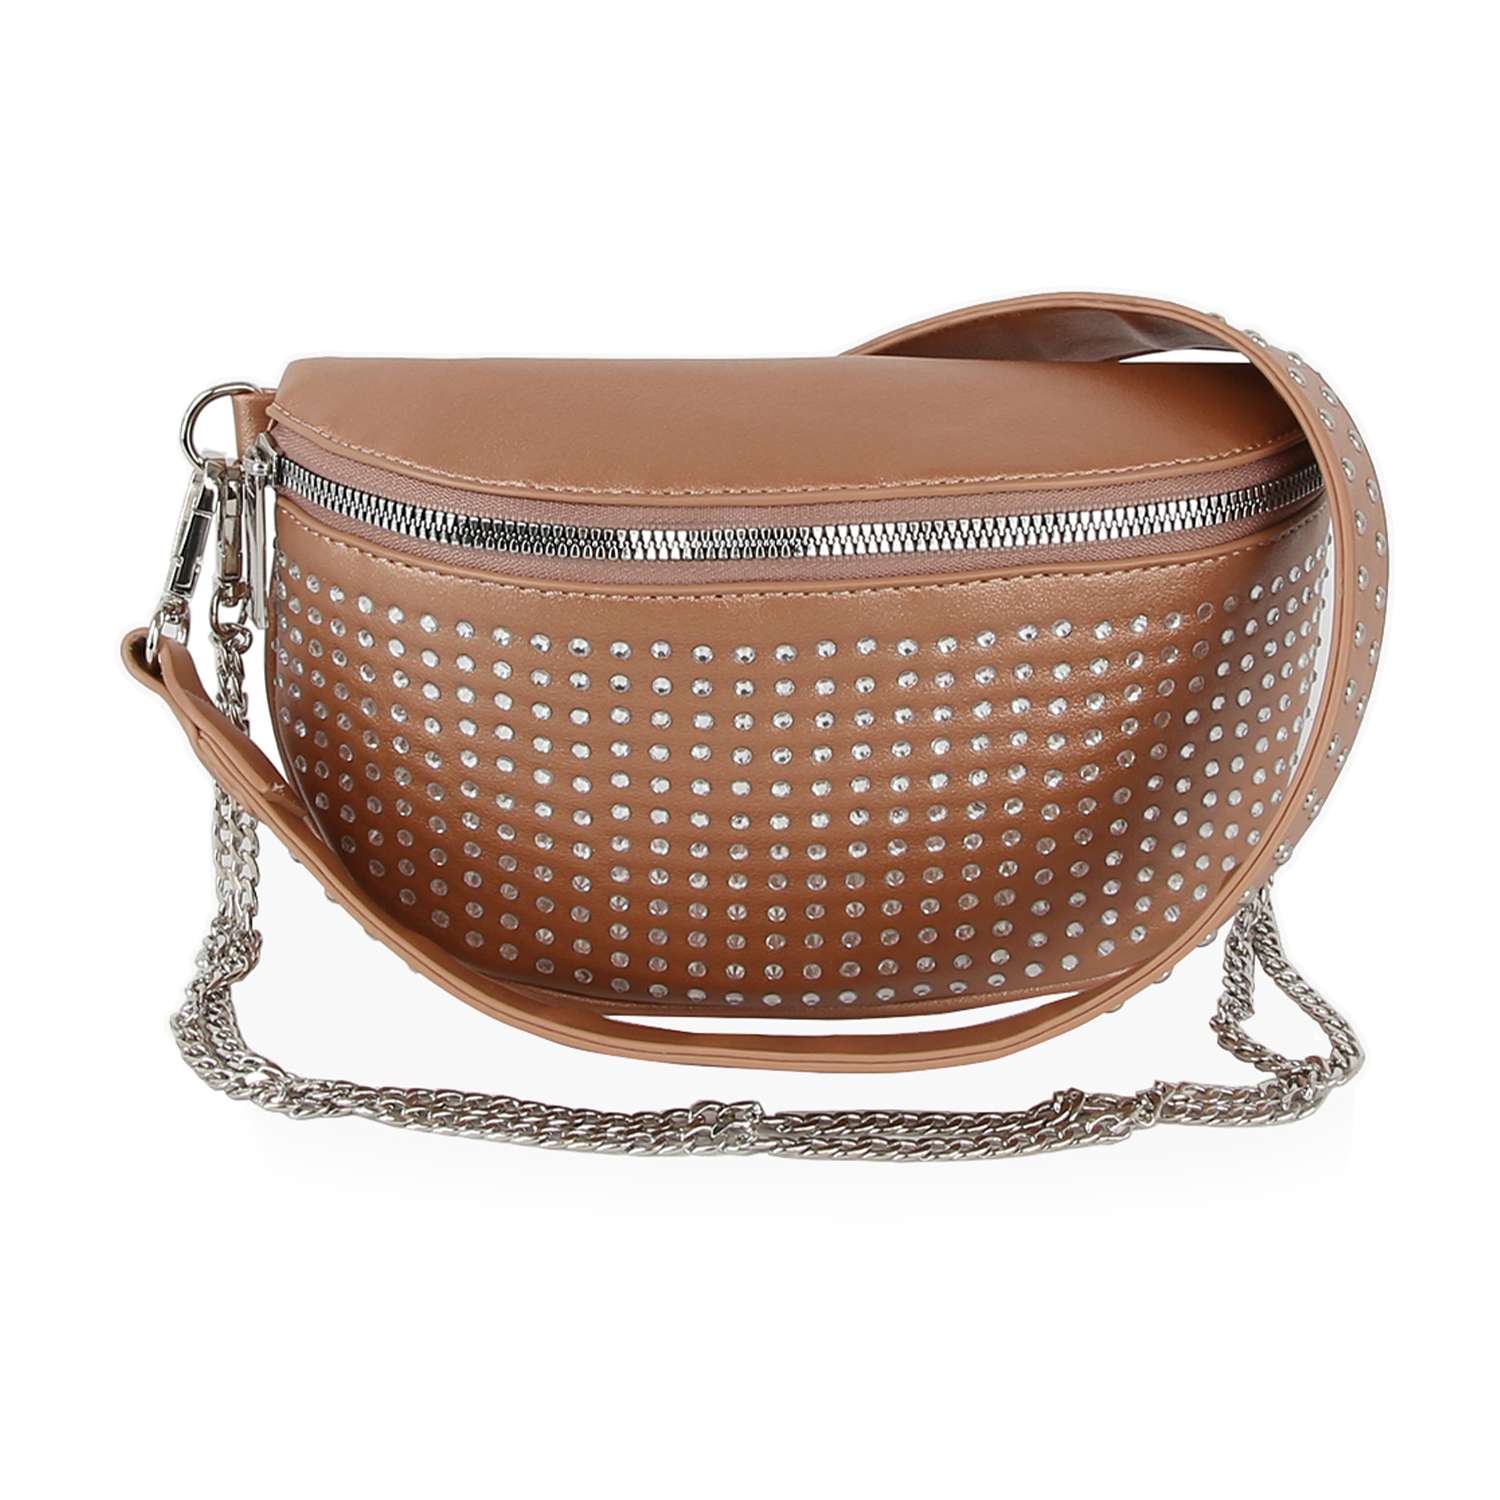 Stylish Studded Crossbody Bag: Pewter - Coco and lulu boutique 